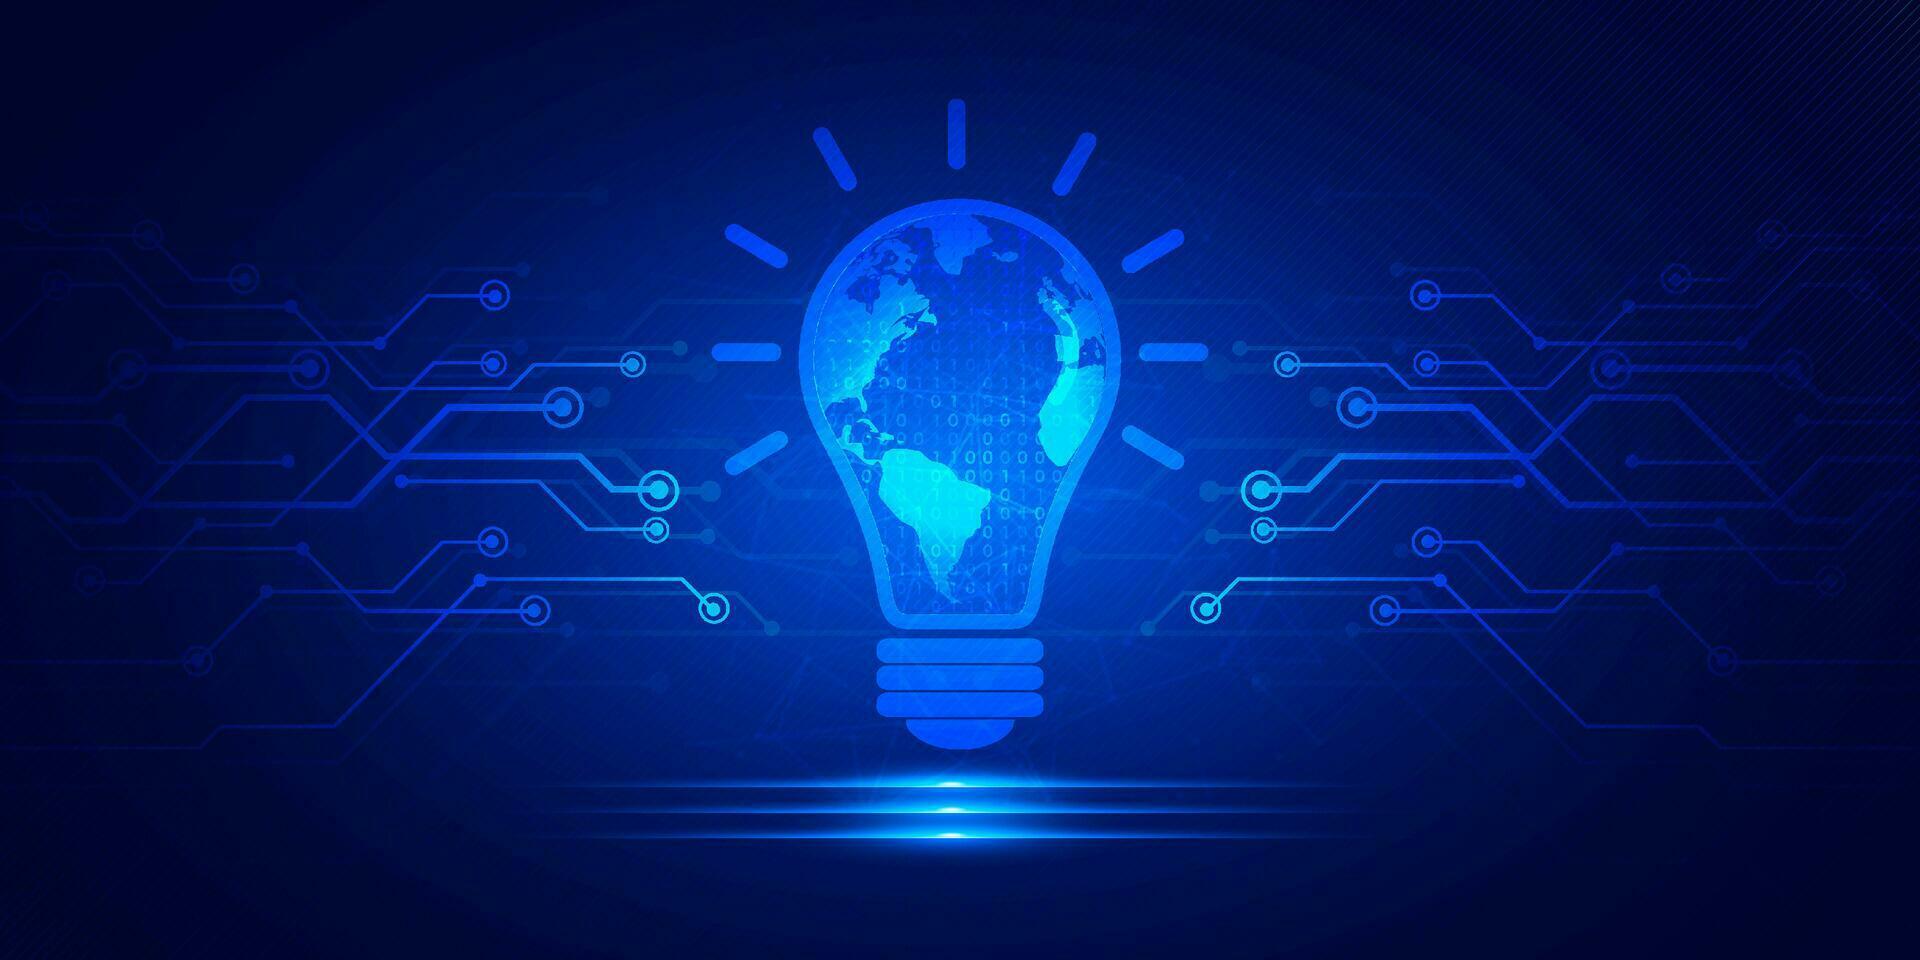 abstract digitaal technologie futuristische idee lamp lamp blauw achtergrond, cyber wetenschap tech lay-out, innovatie toekomst ai groot gegevens, globaal internet netwerk verbinding, wolk hi-tech illustratie vector